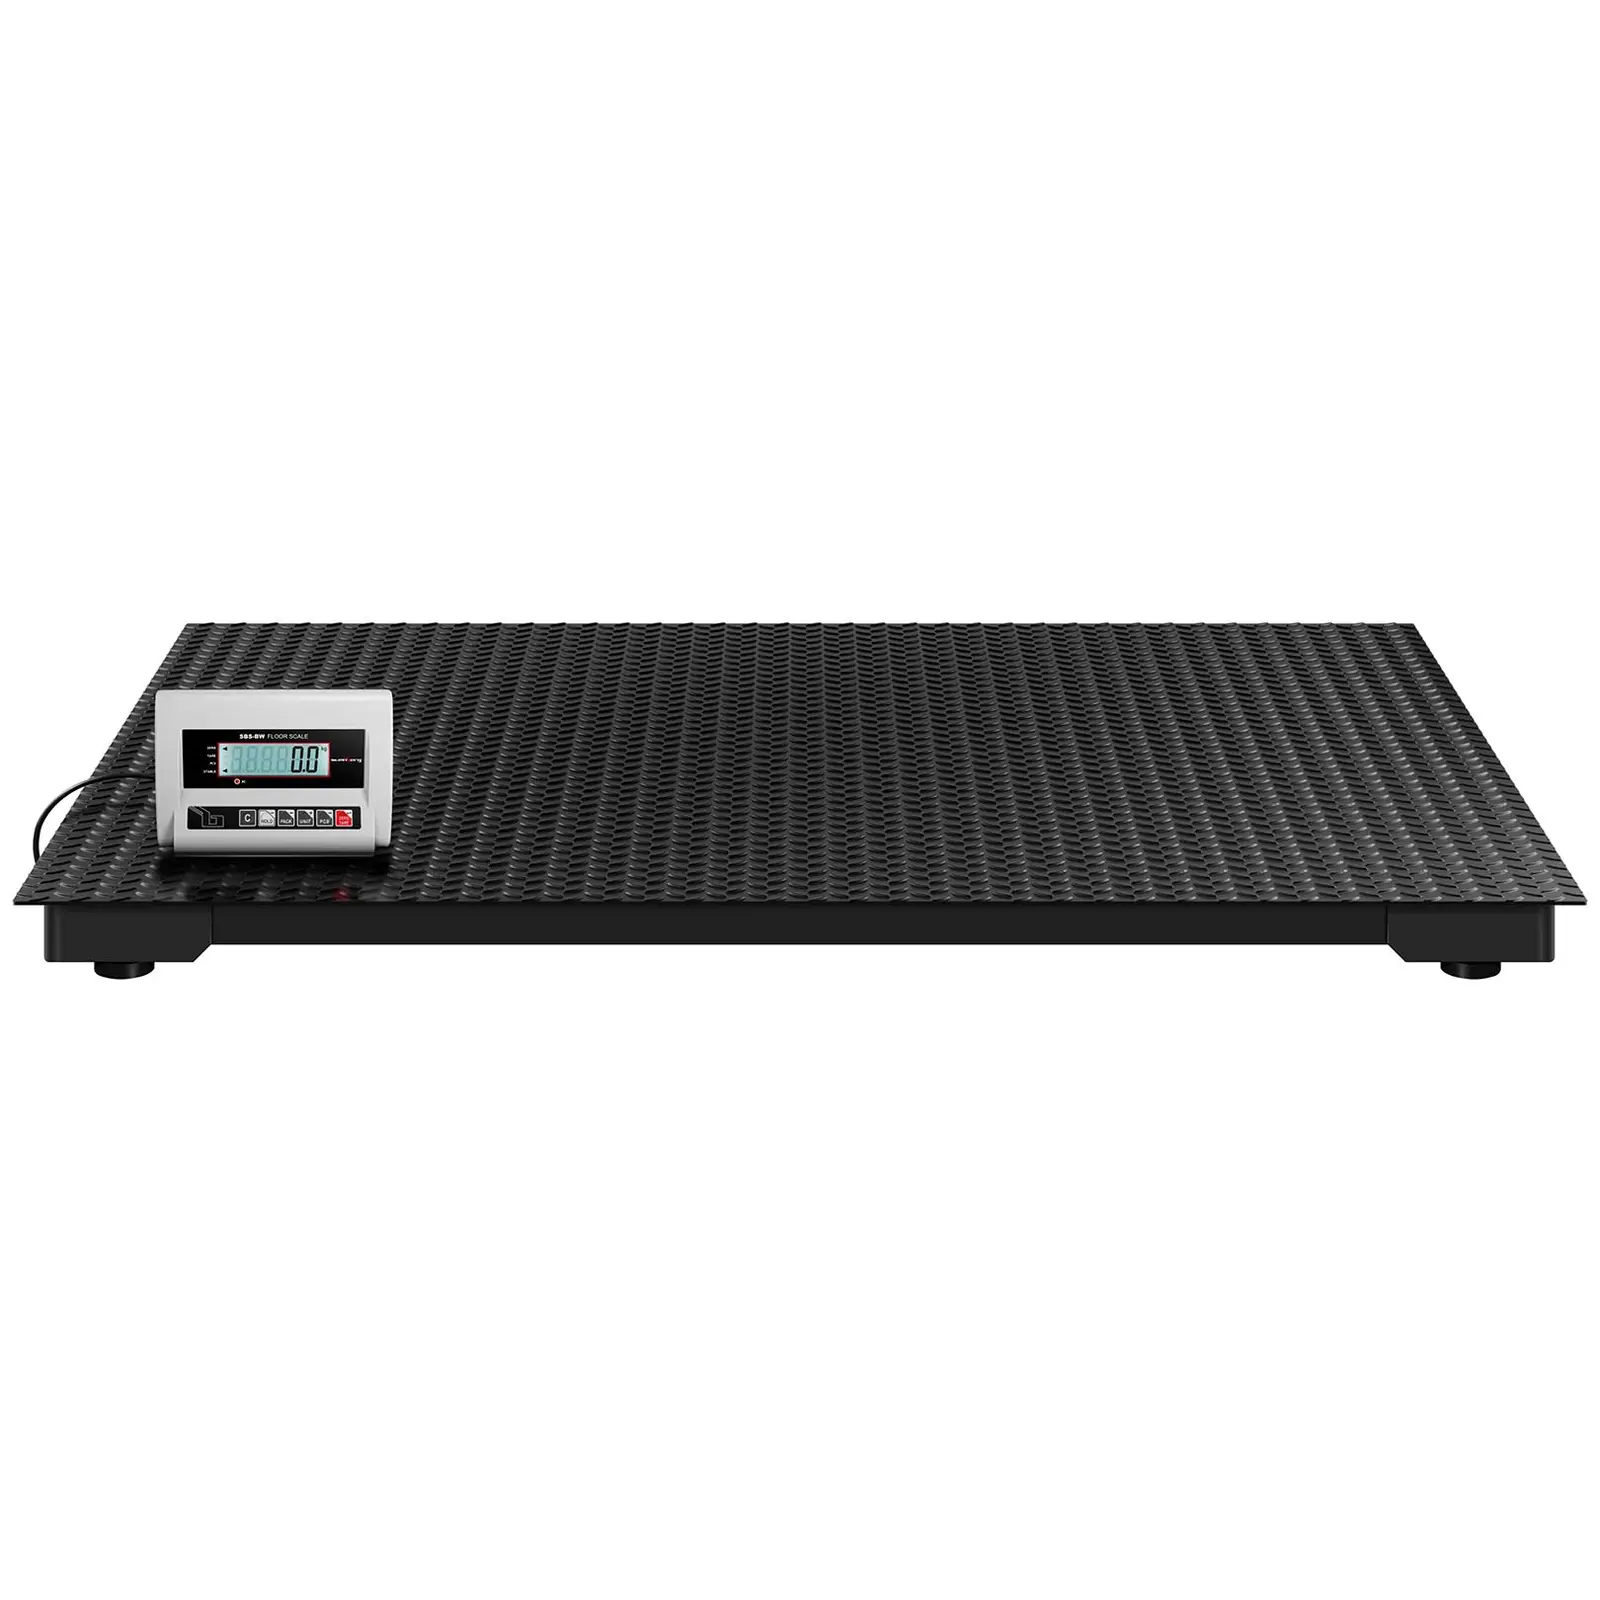 Podlahová váha s rampou - sada - 5 000 kg / 2 kg - LCD - baterie 10 h 